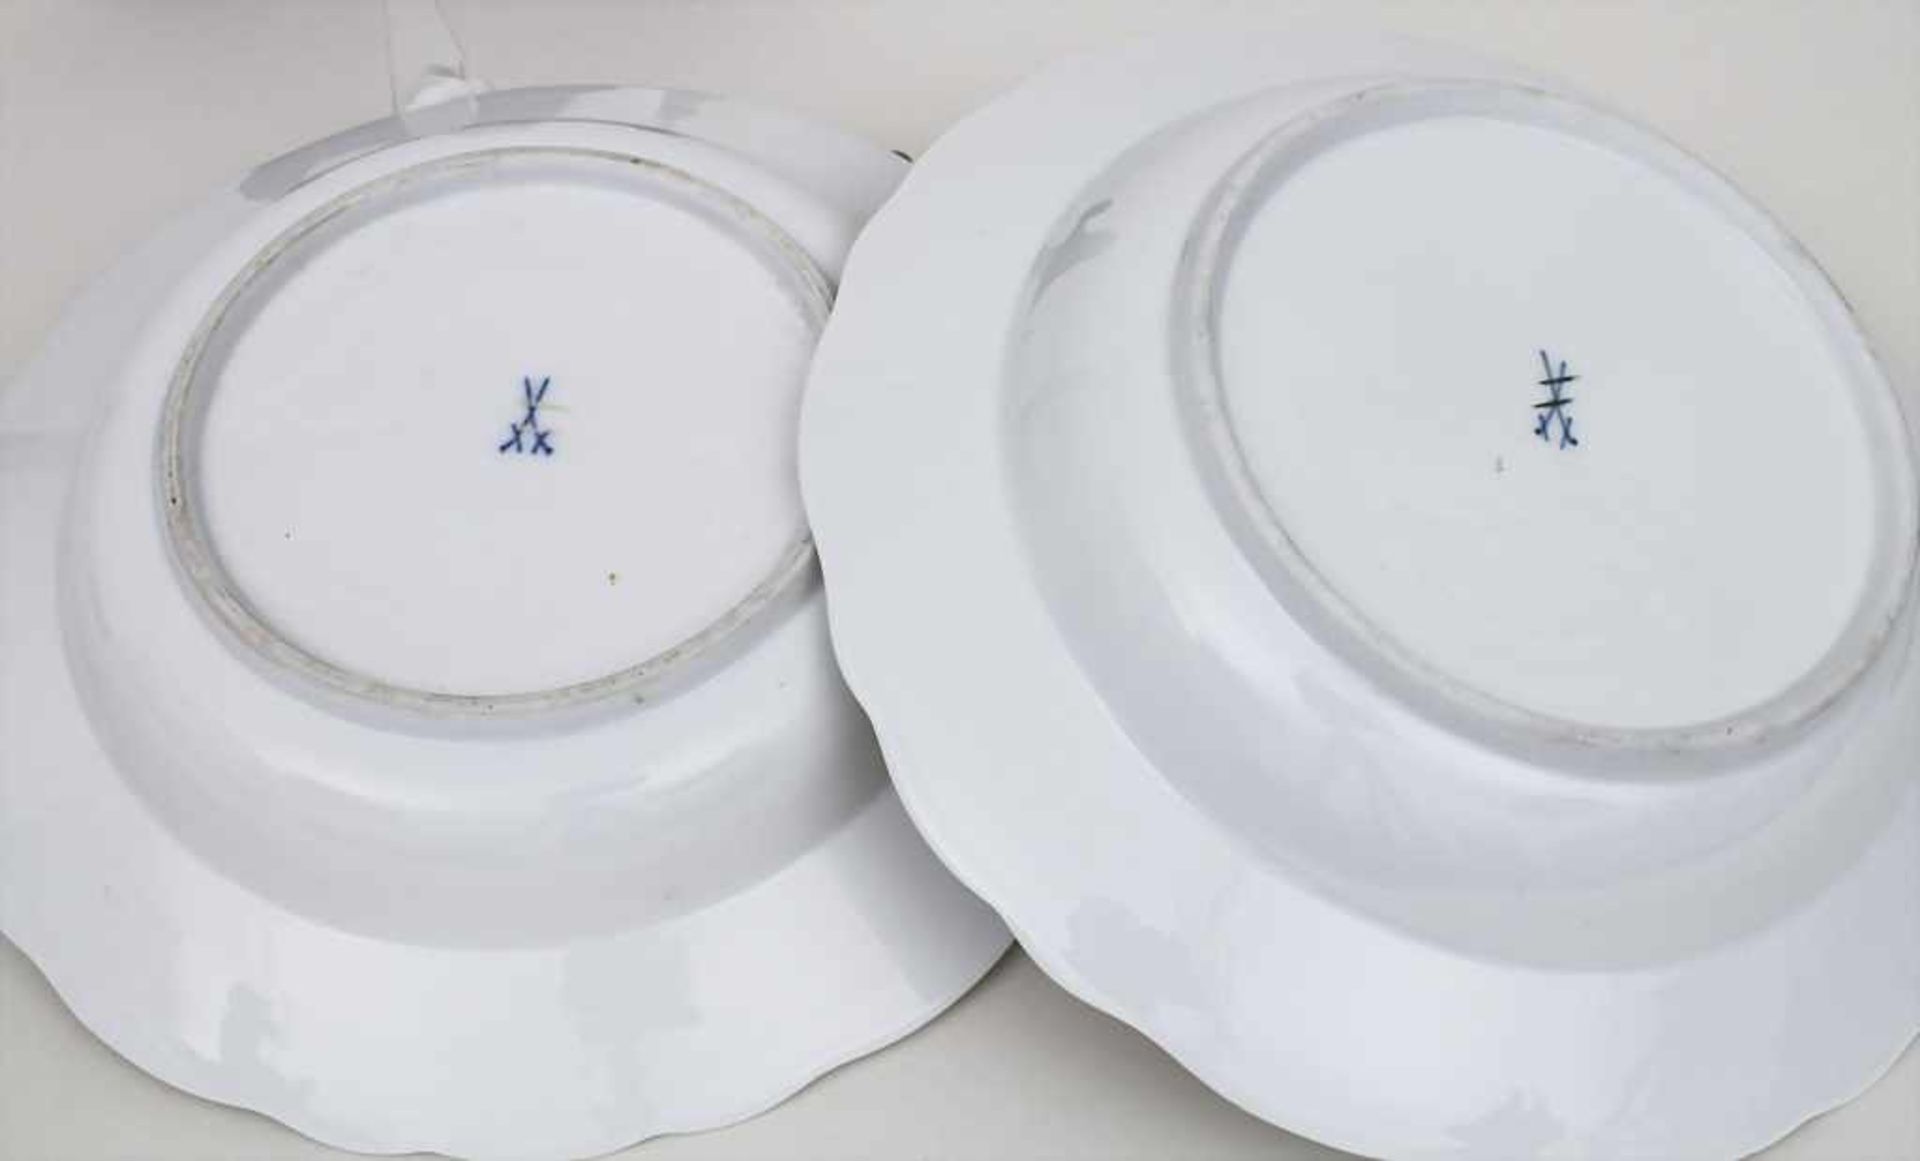 2 tiefe Teller / 2 soup plates, Meissen, Ende 19. Jh. Material: Porzellan, polychrom bemalt, - Bild 2 aus 2